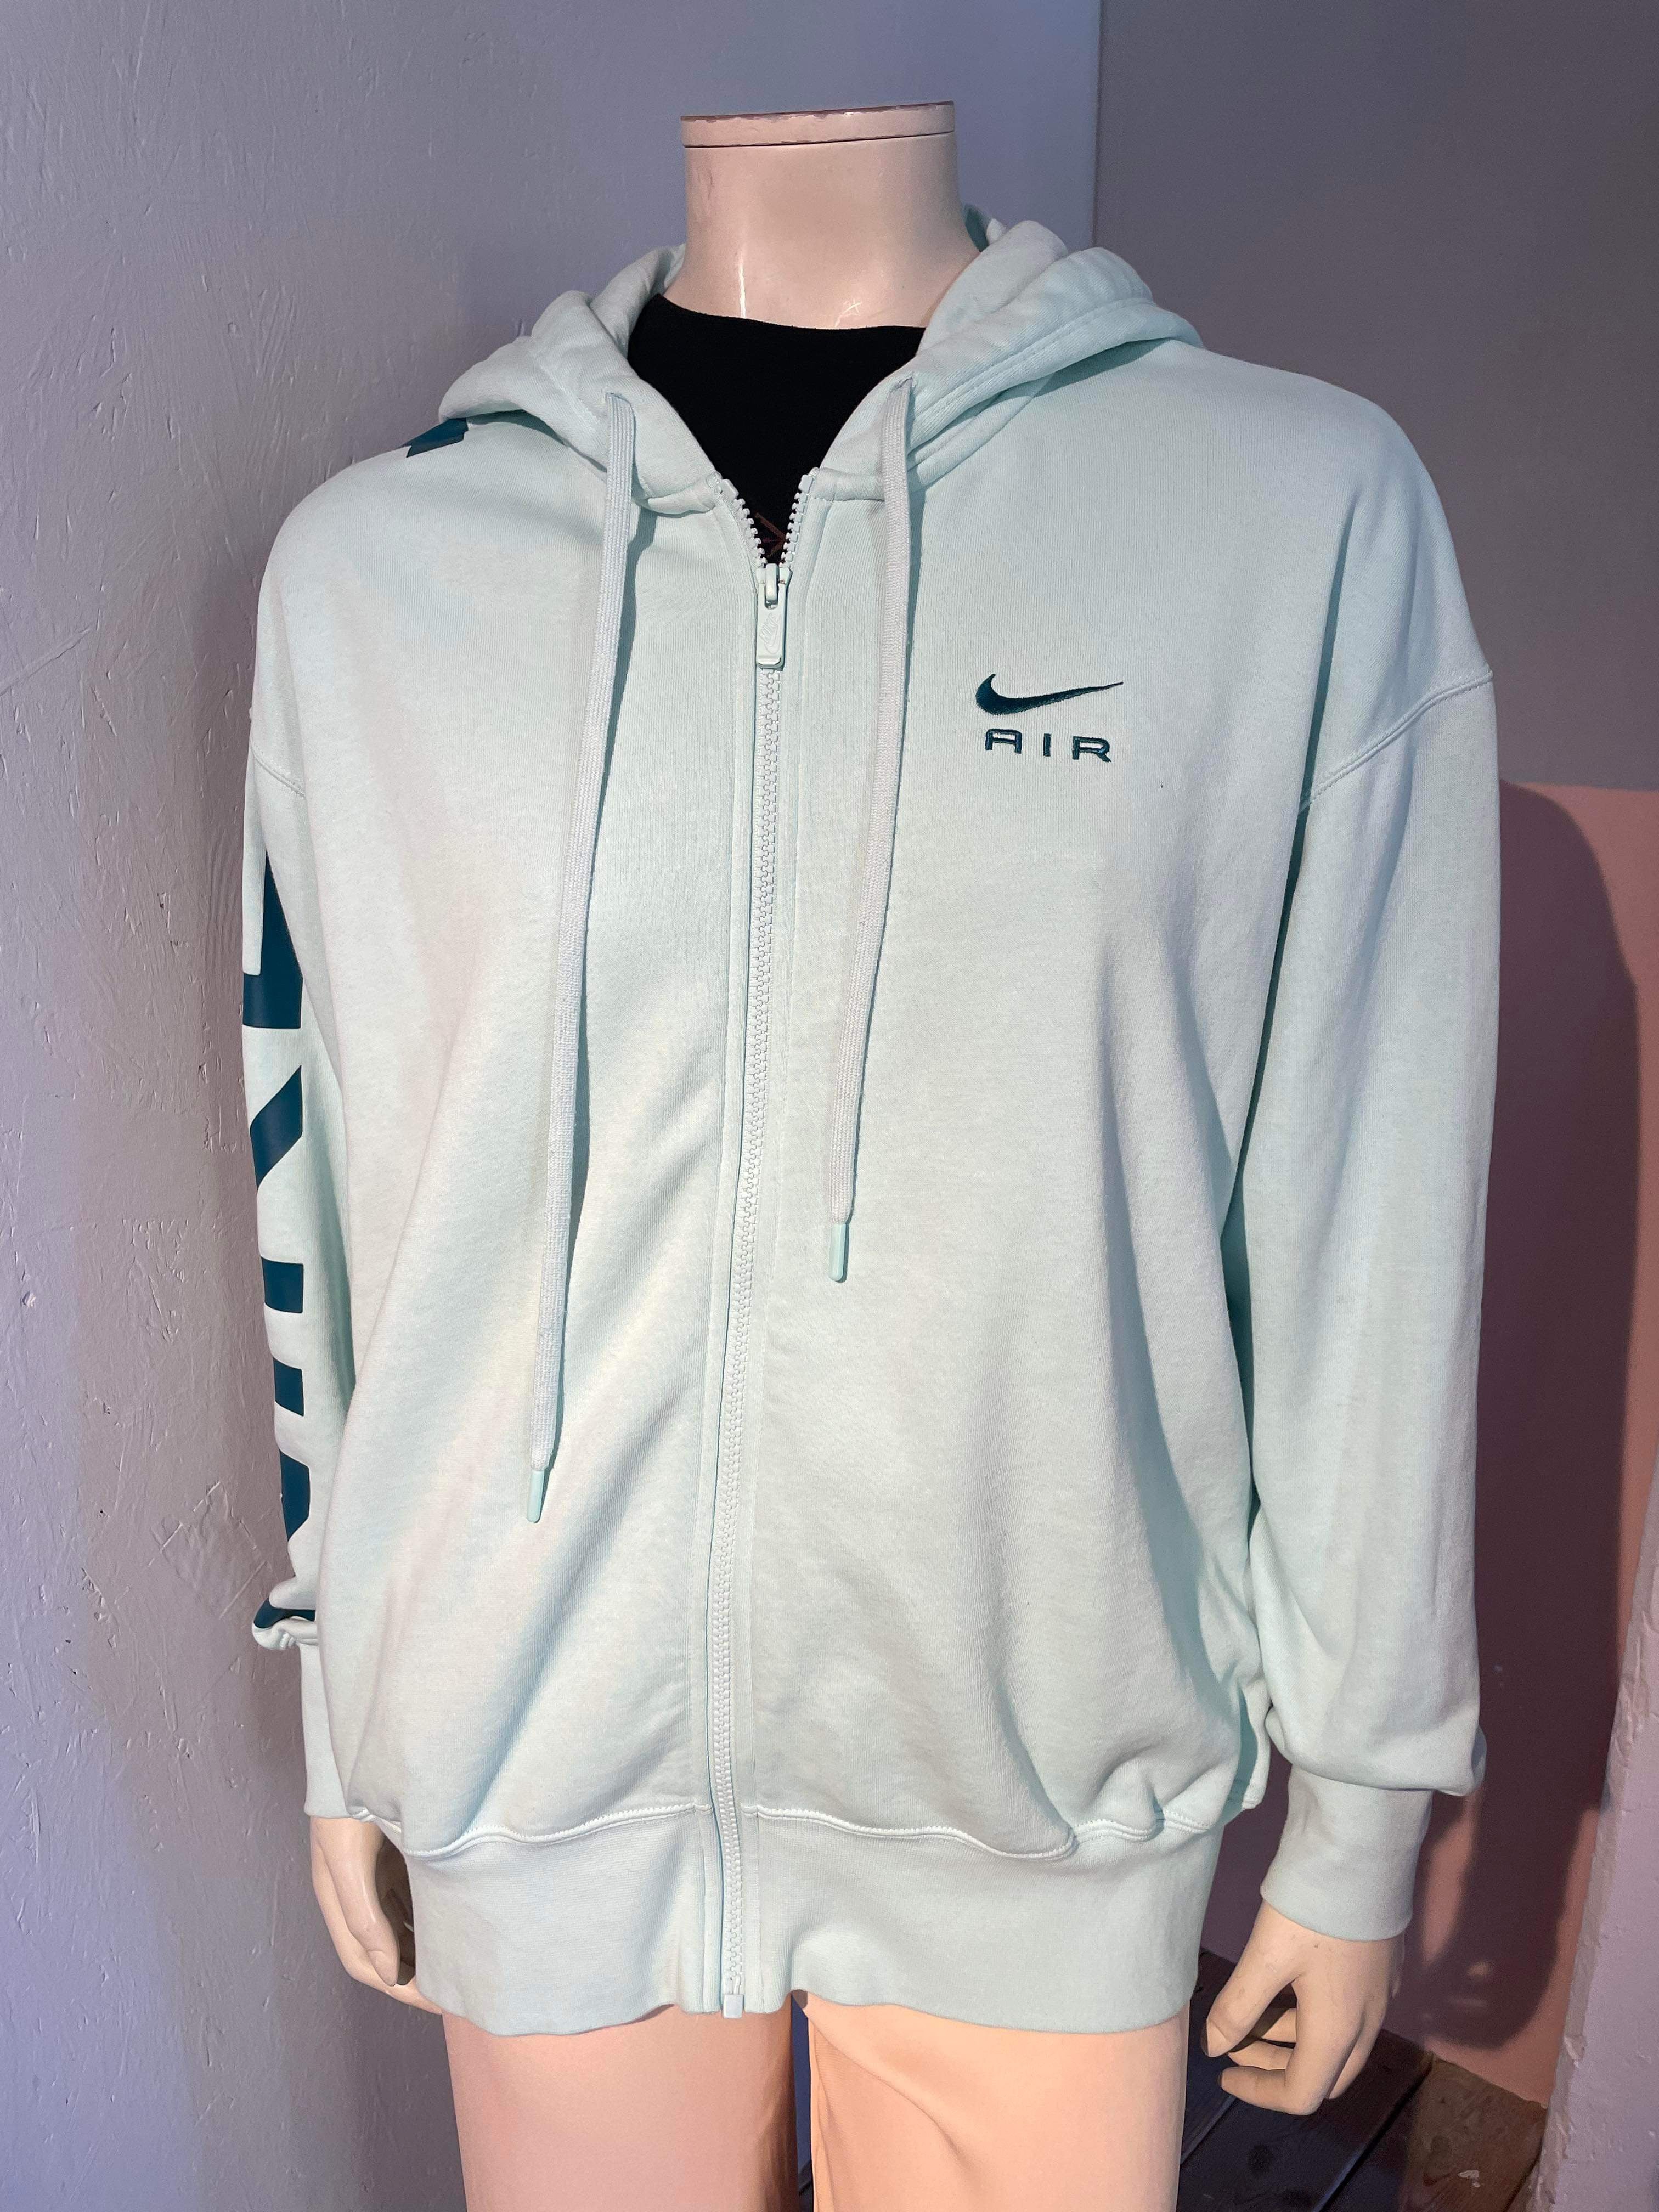 Nike - Cardigan - Size: S